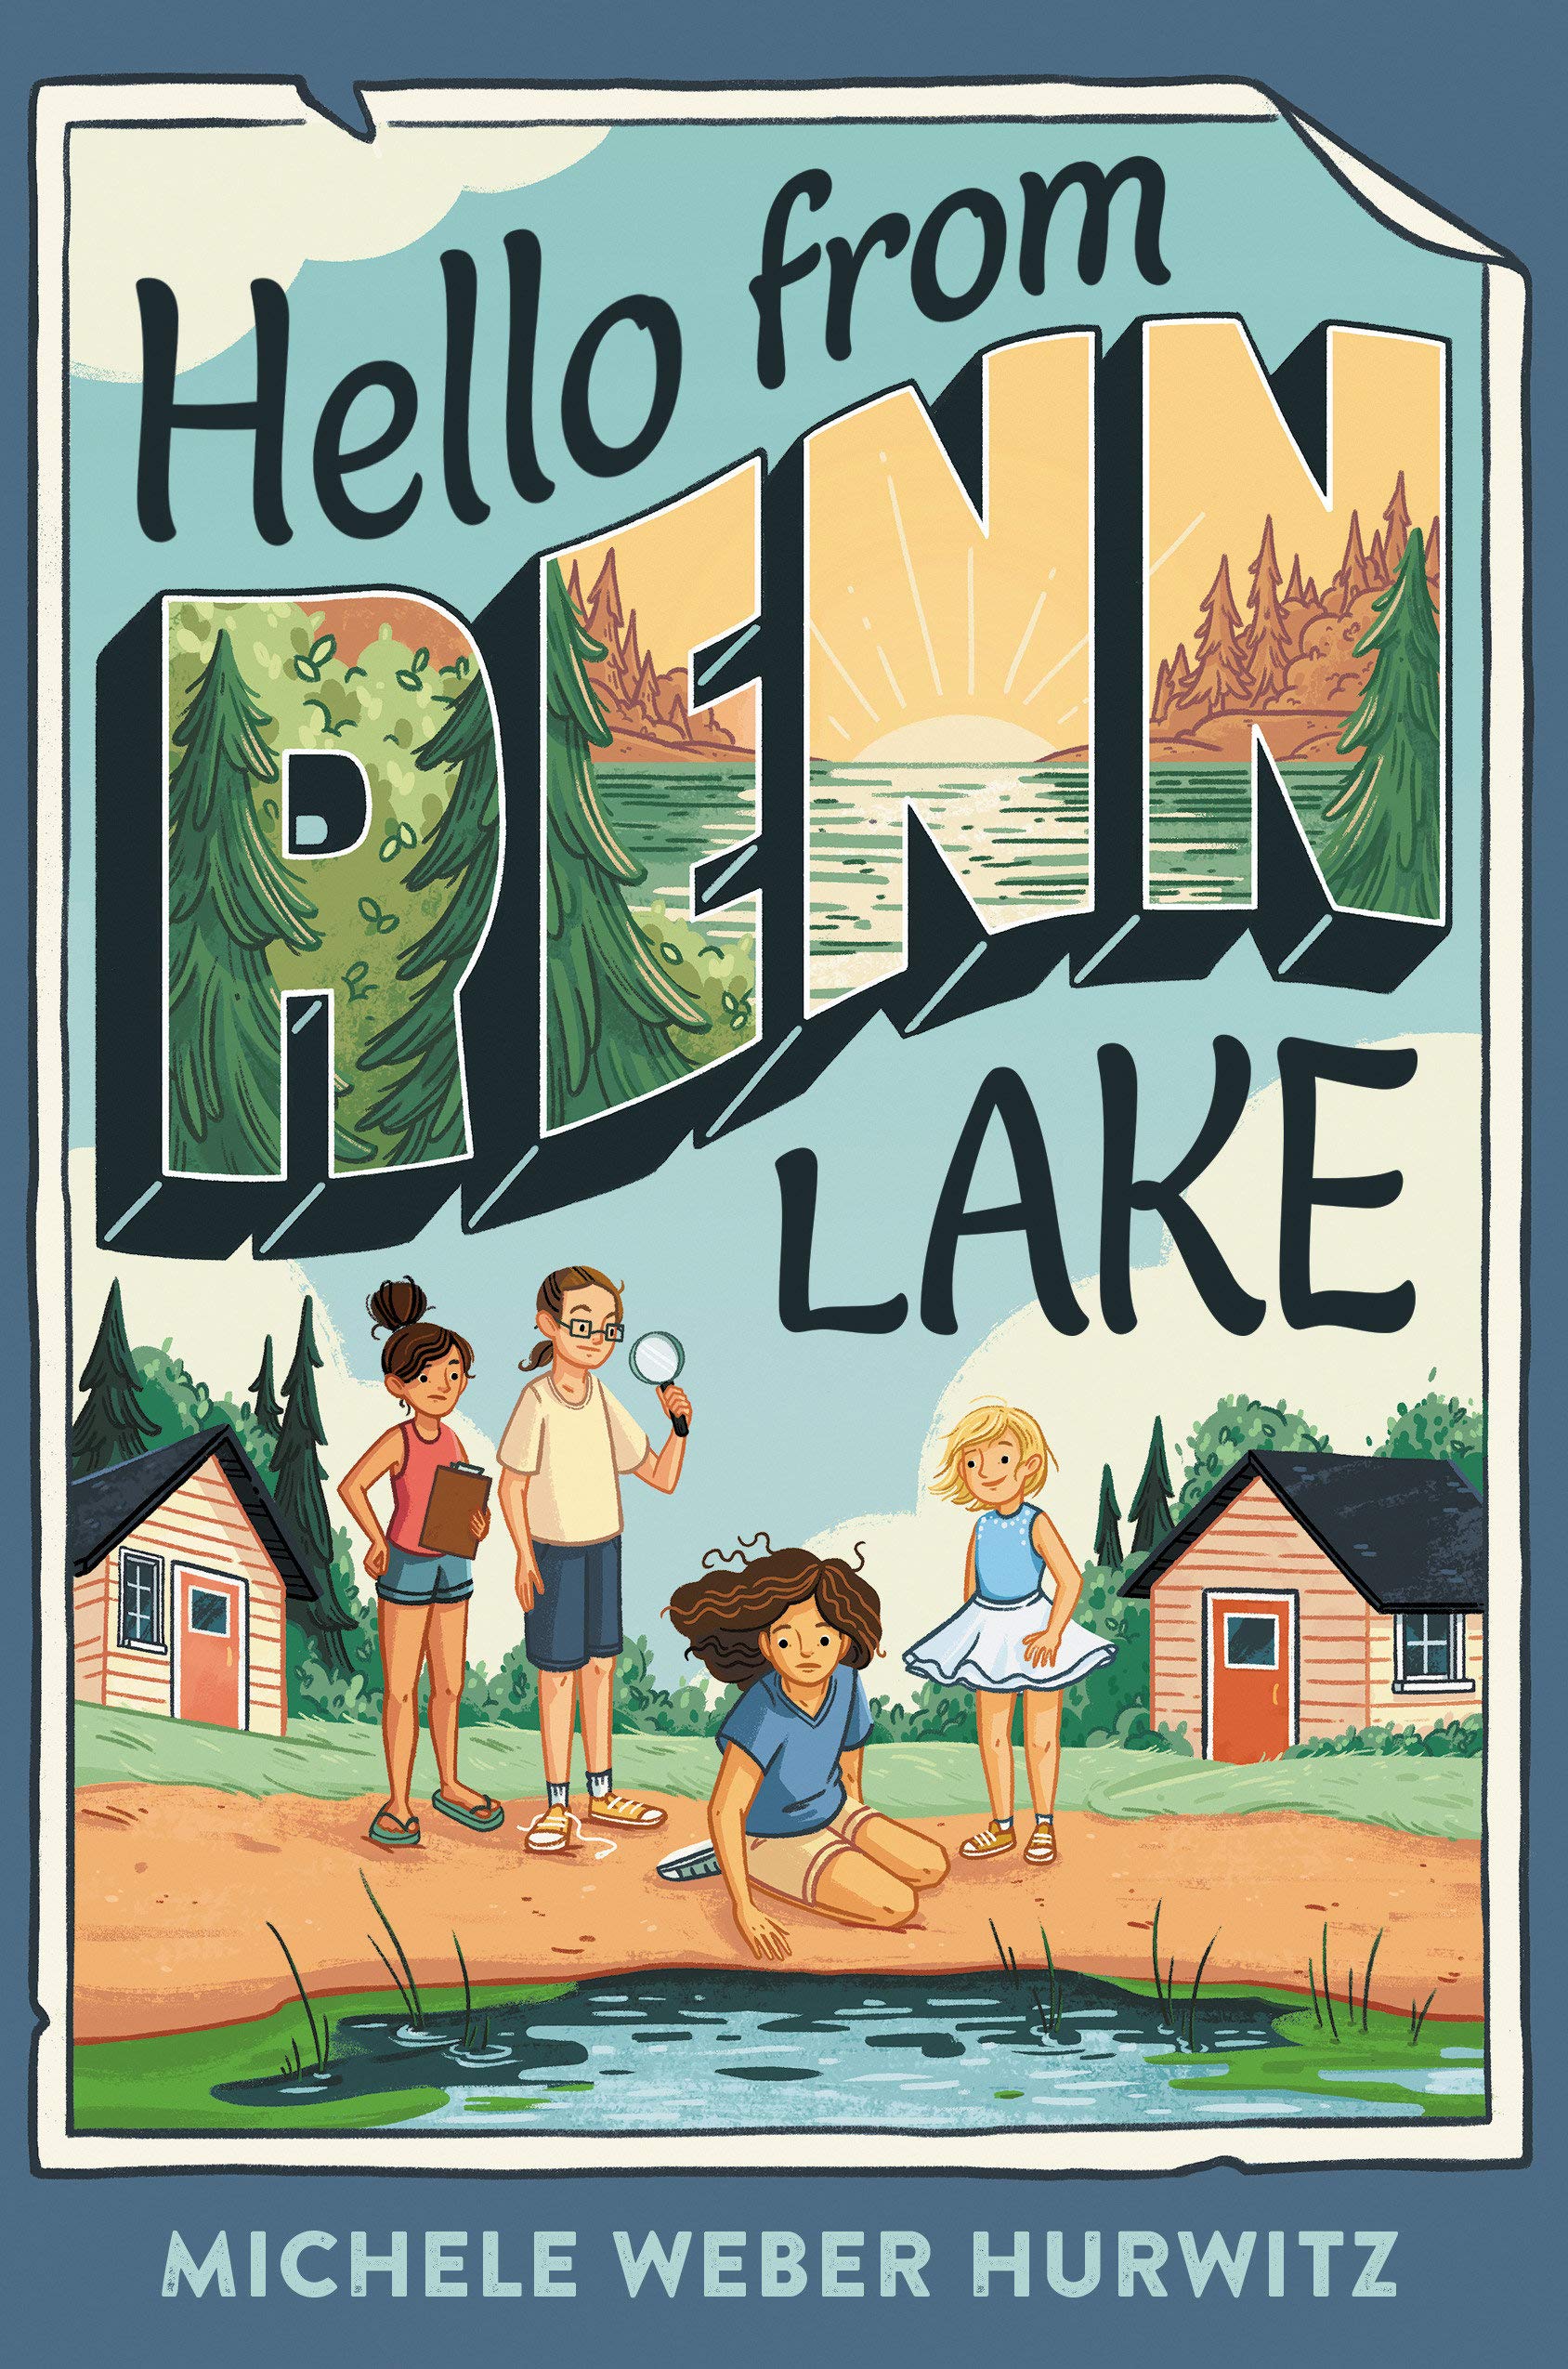 Hello from Renn Lake by Michele Weber Hurwitz